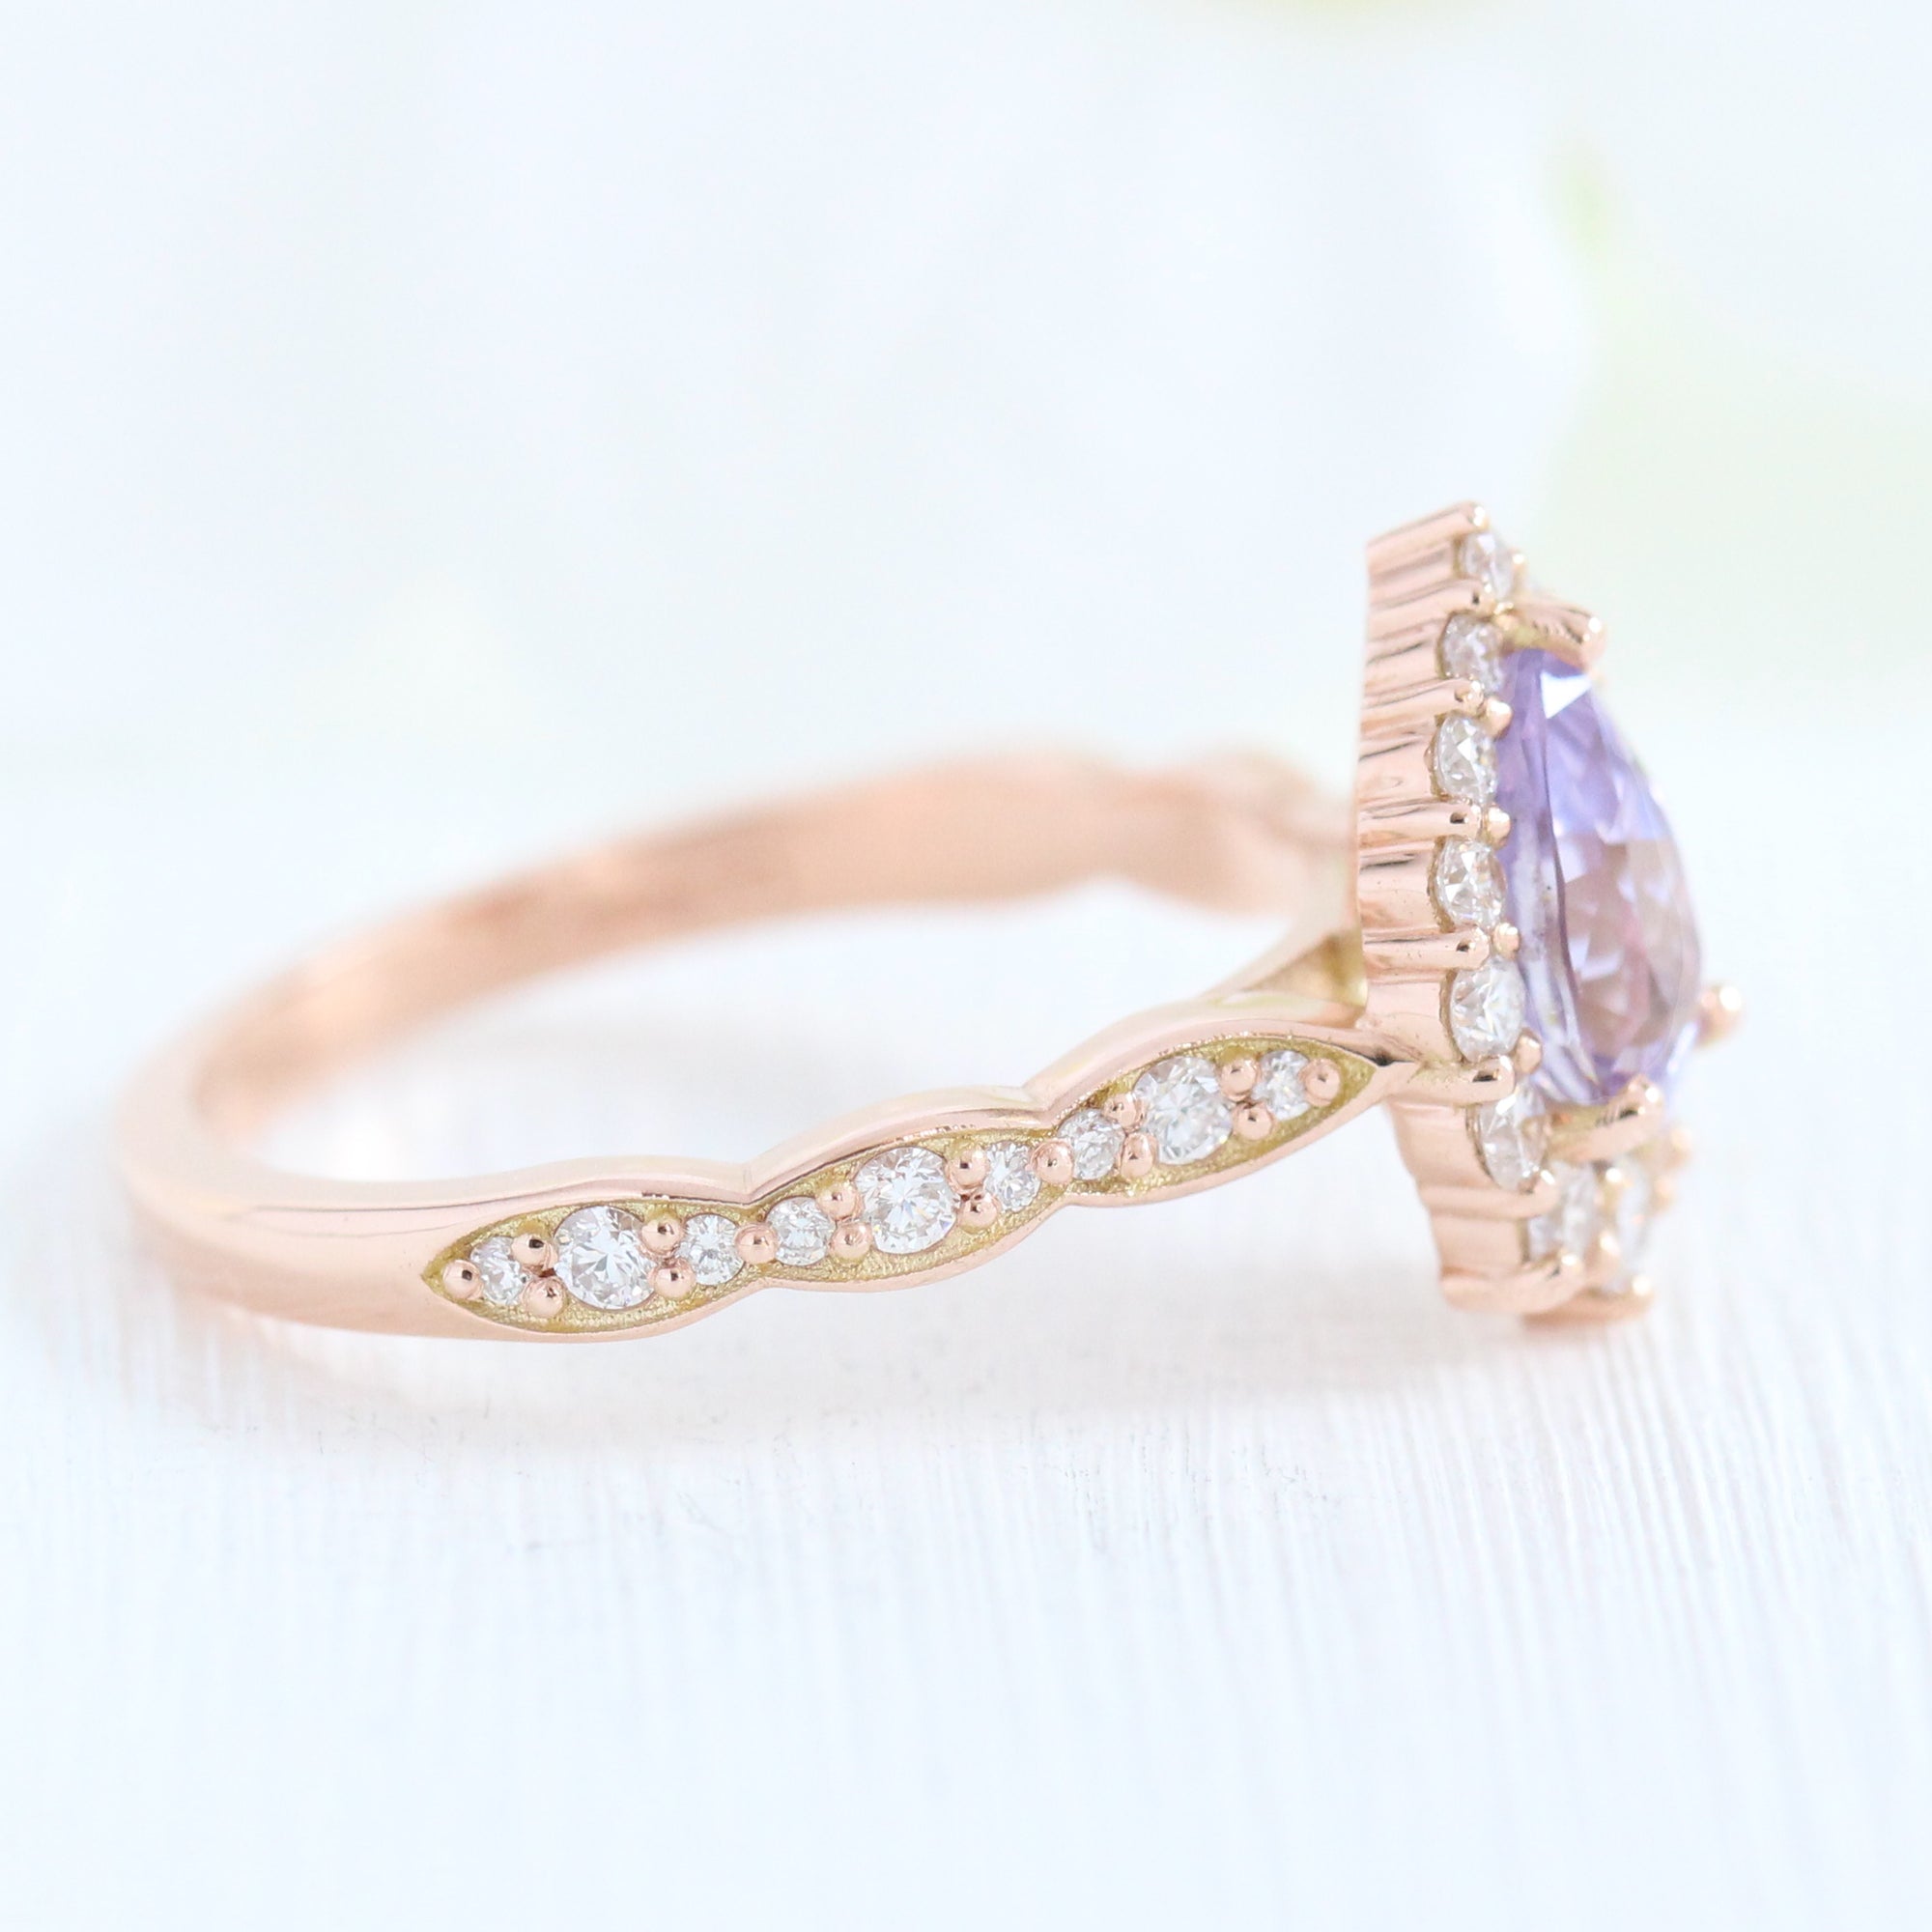 Pear lavender sapphire engagement ring rose gold tiara halo diamond ring la more design jewelry